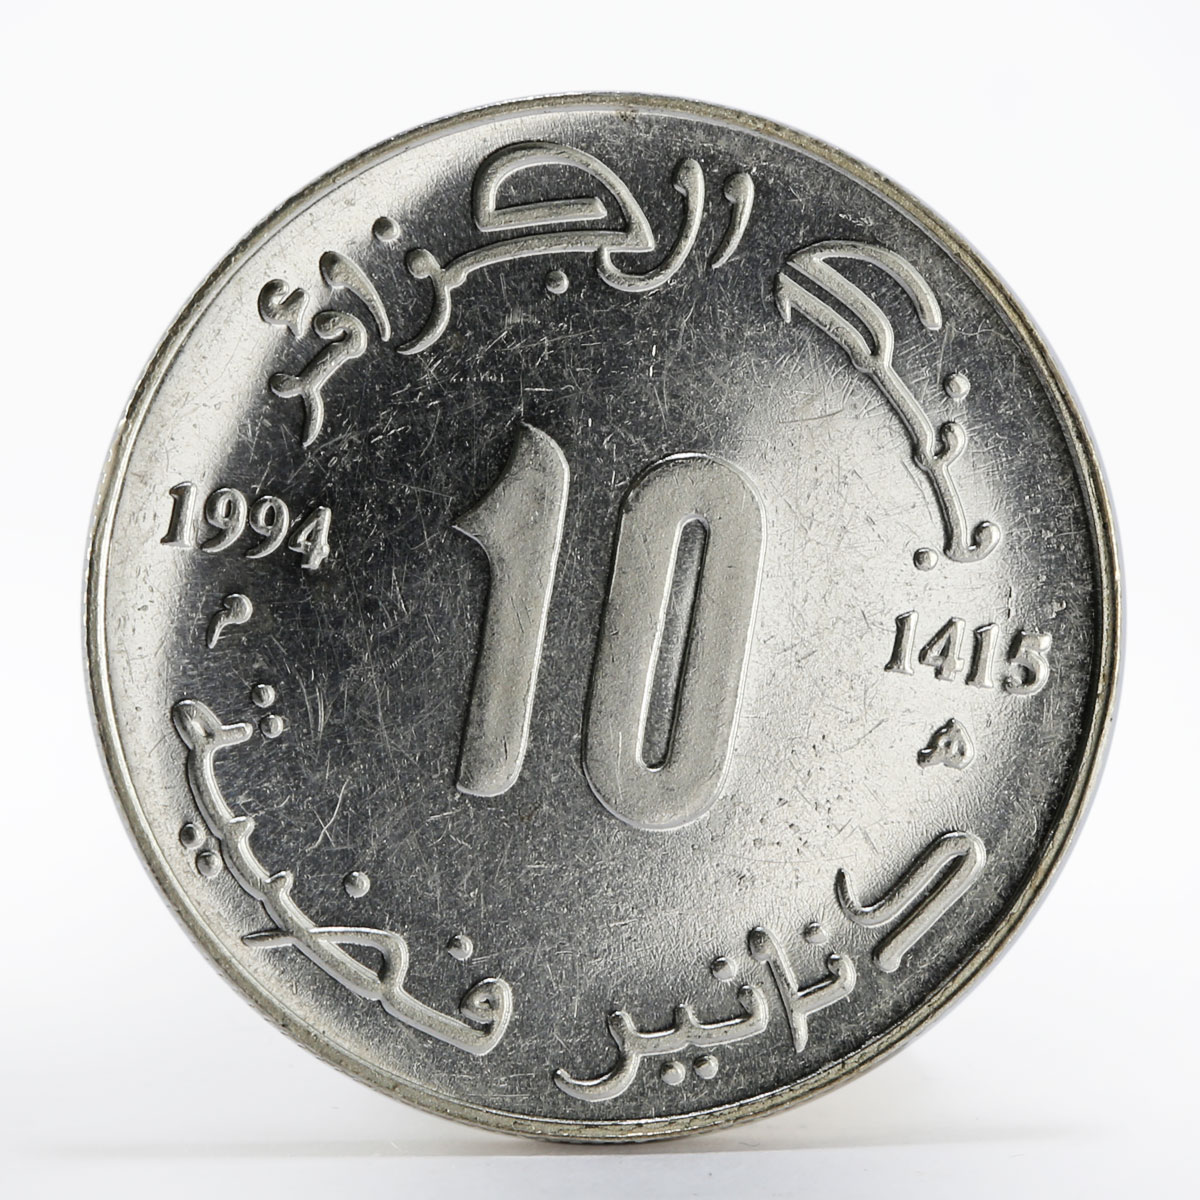 Algeria 10 dinars Jugurtha King of Numidia silver coin 1994